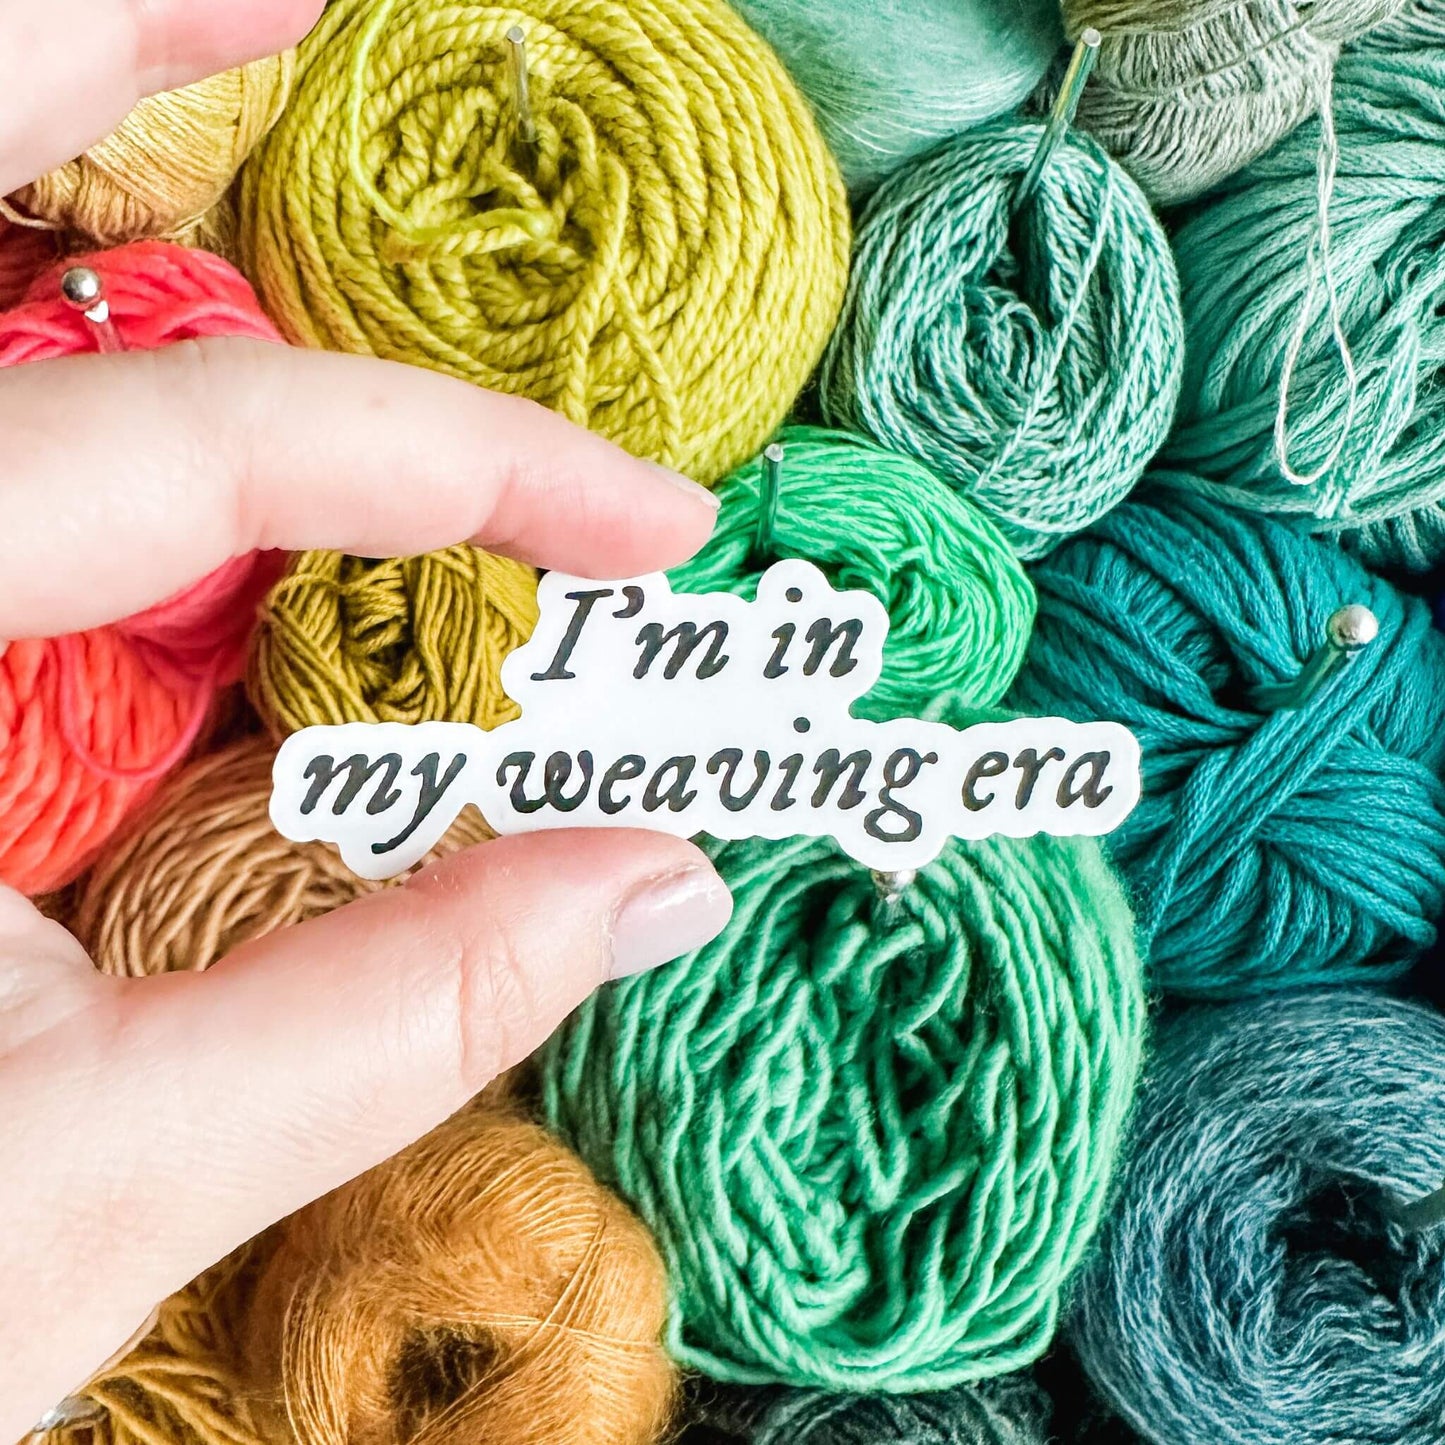 i'm in my weaving era sticker - wear and woven